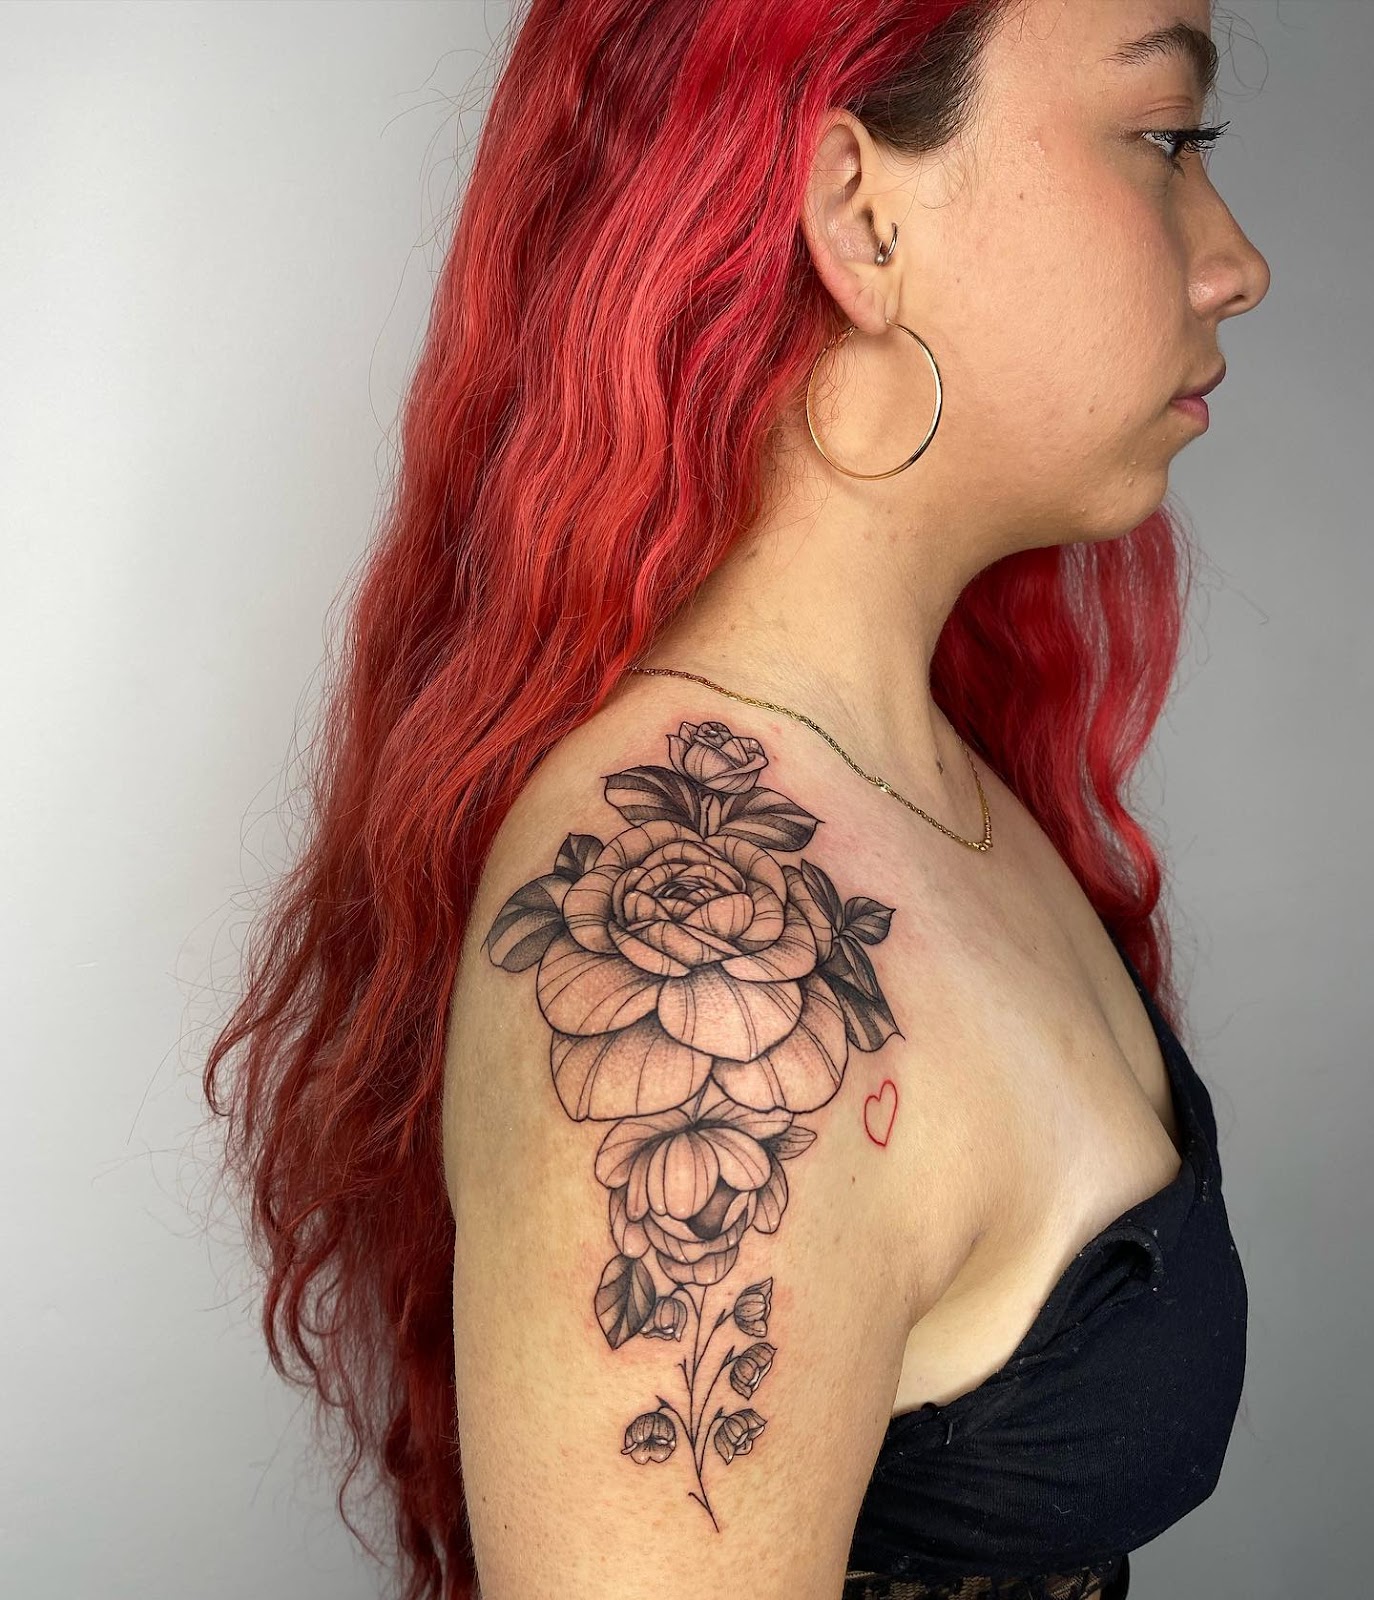 Linework Black Rose Classy Shoulder Tattoos Female